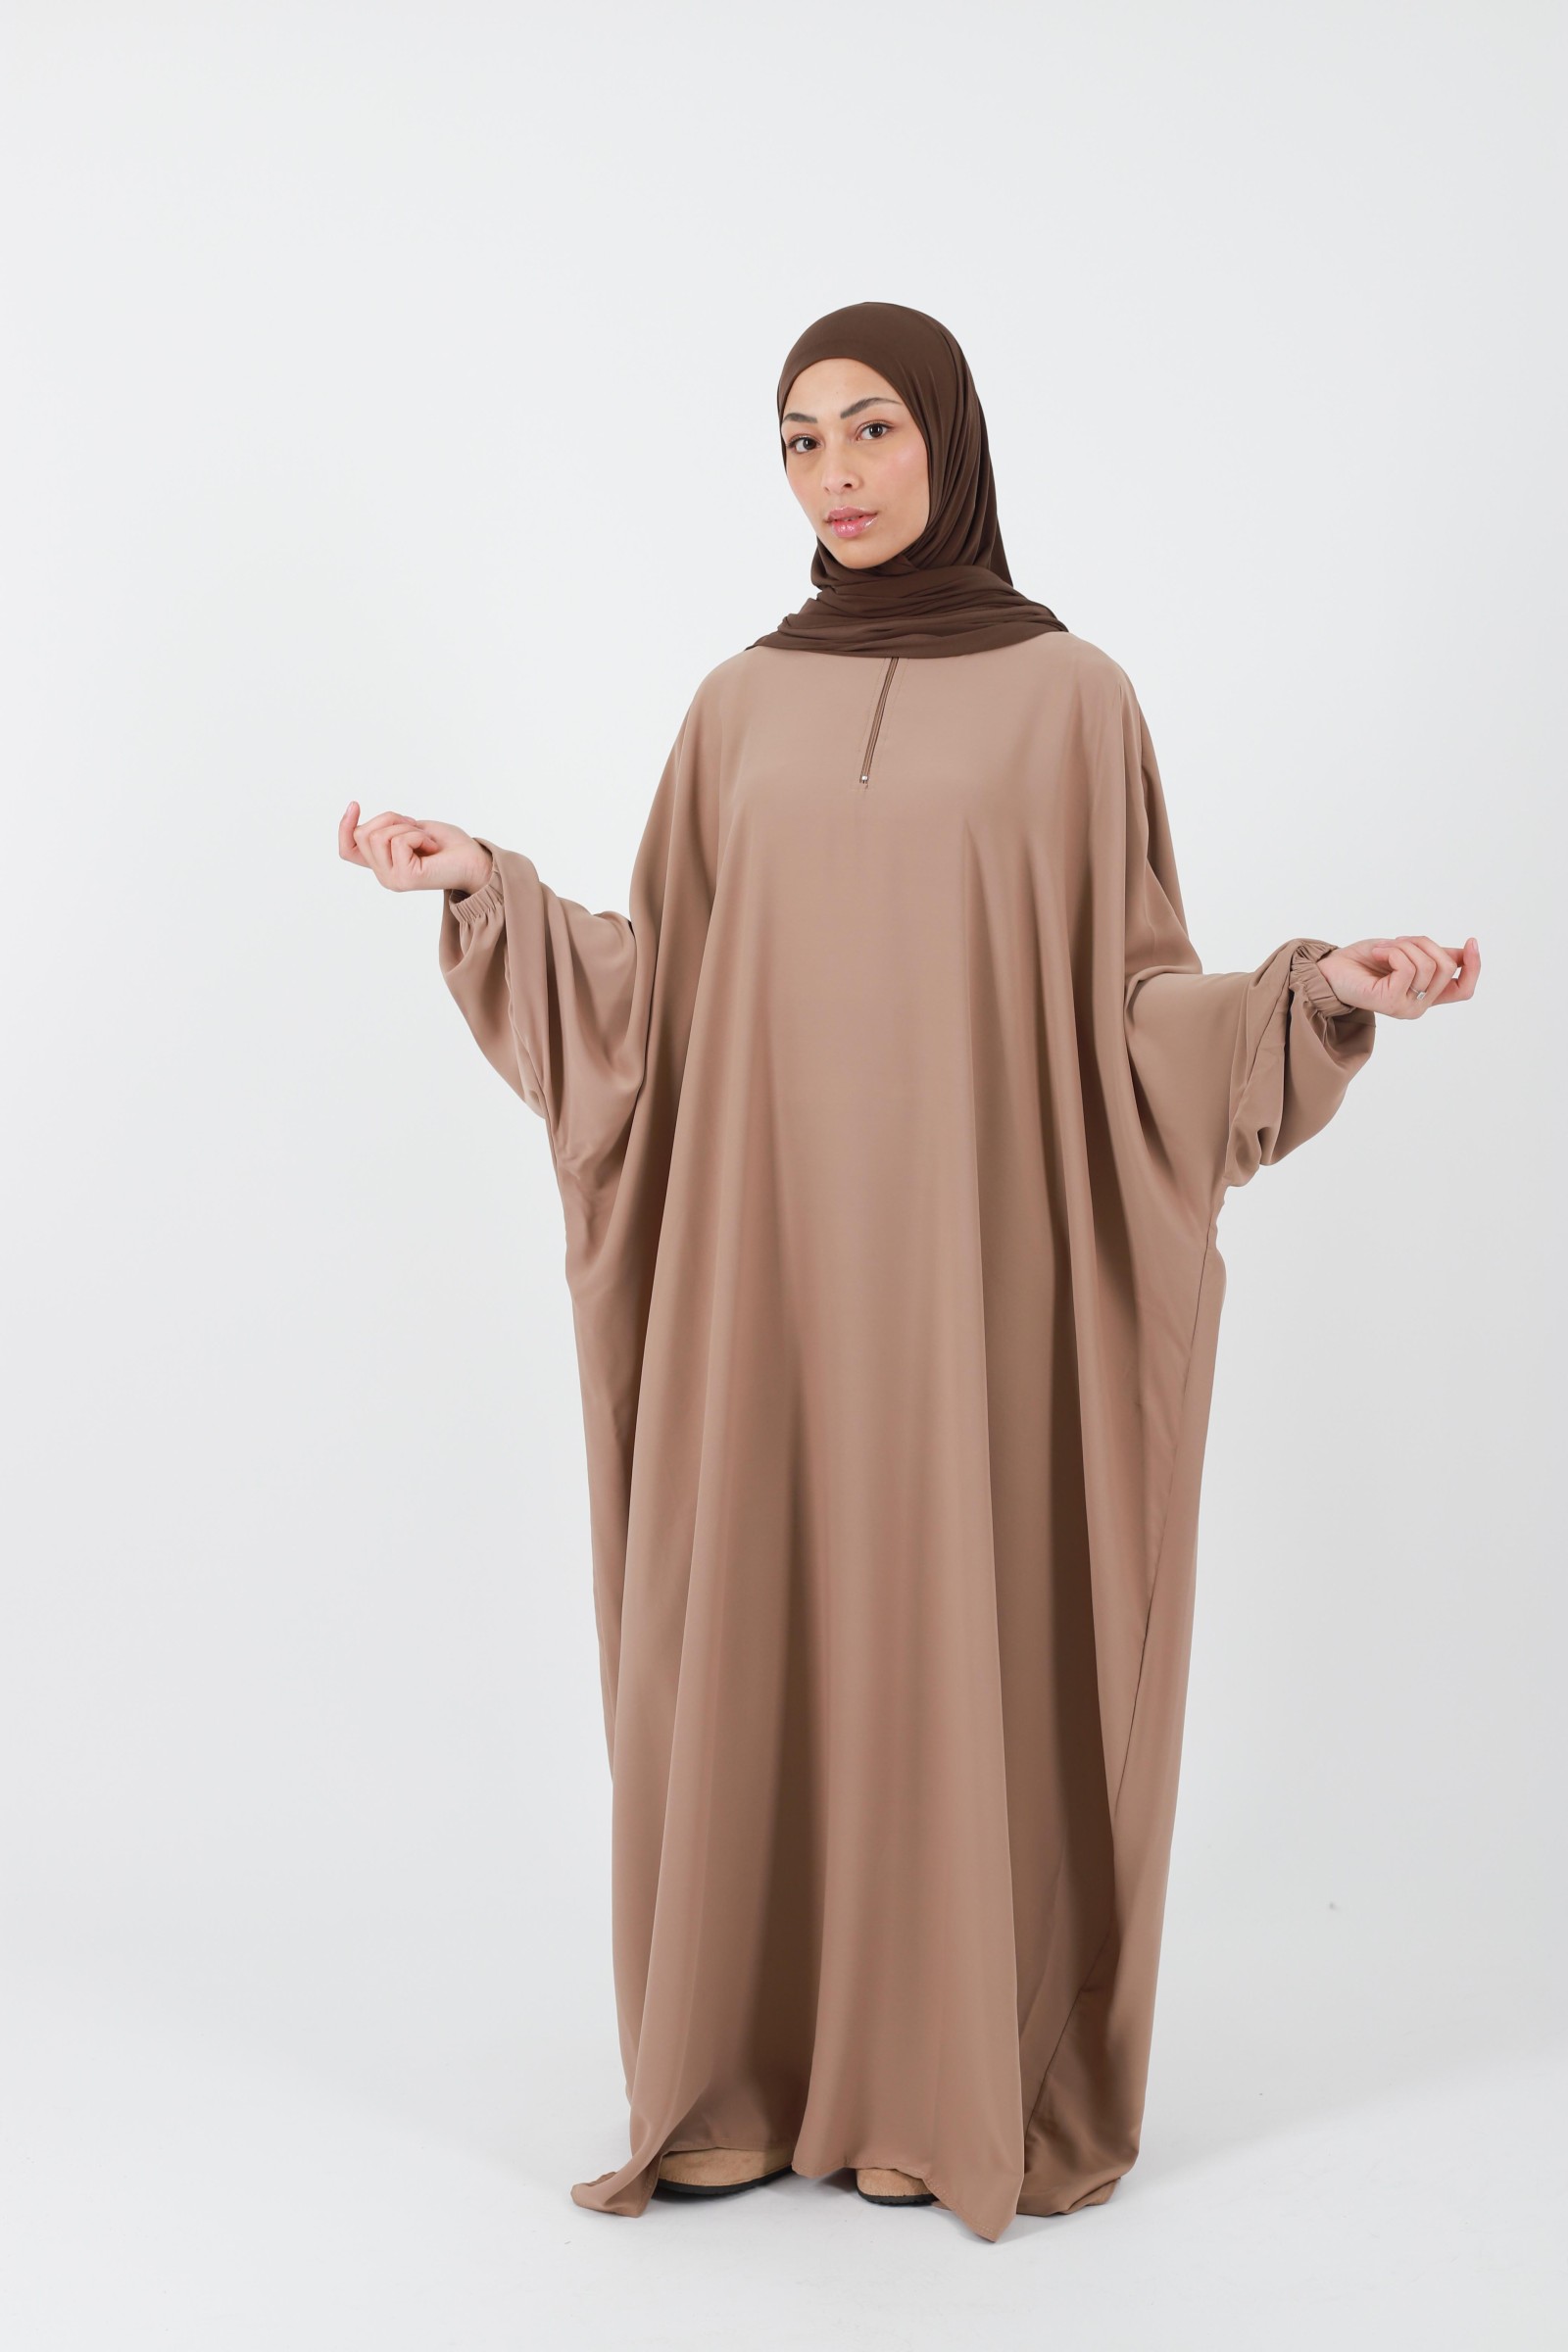 Longue abaya pour femme 1m80 abaya femme voilée